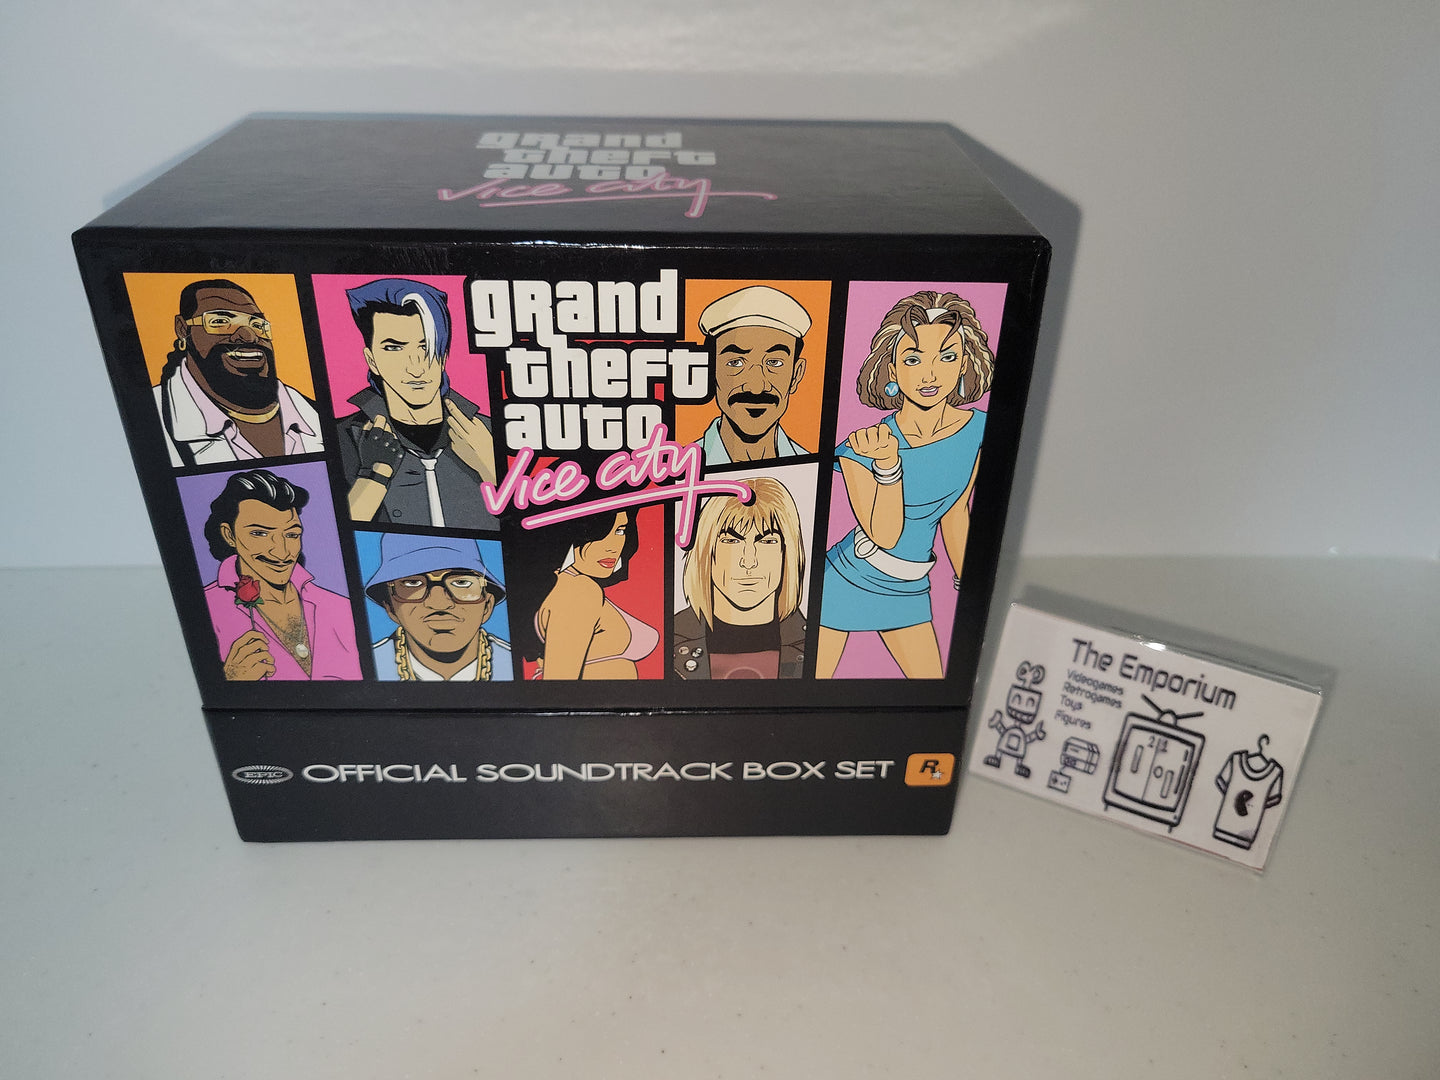 Grand Theft Auto: Vice City Box Set Original Soundtrack CD - Music cd soundtrack